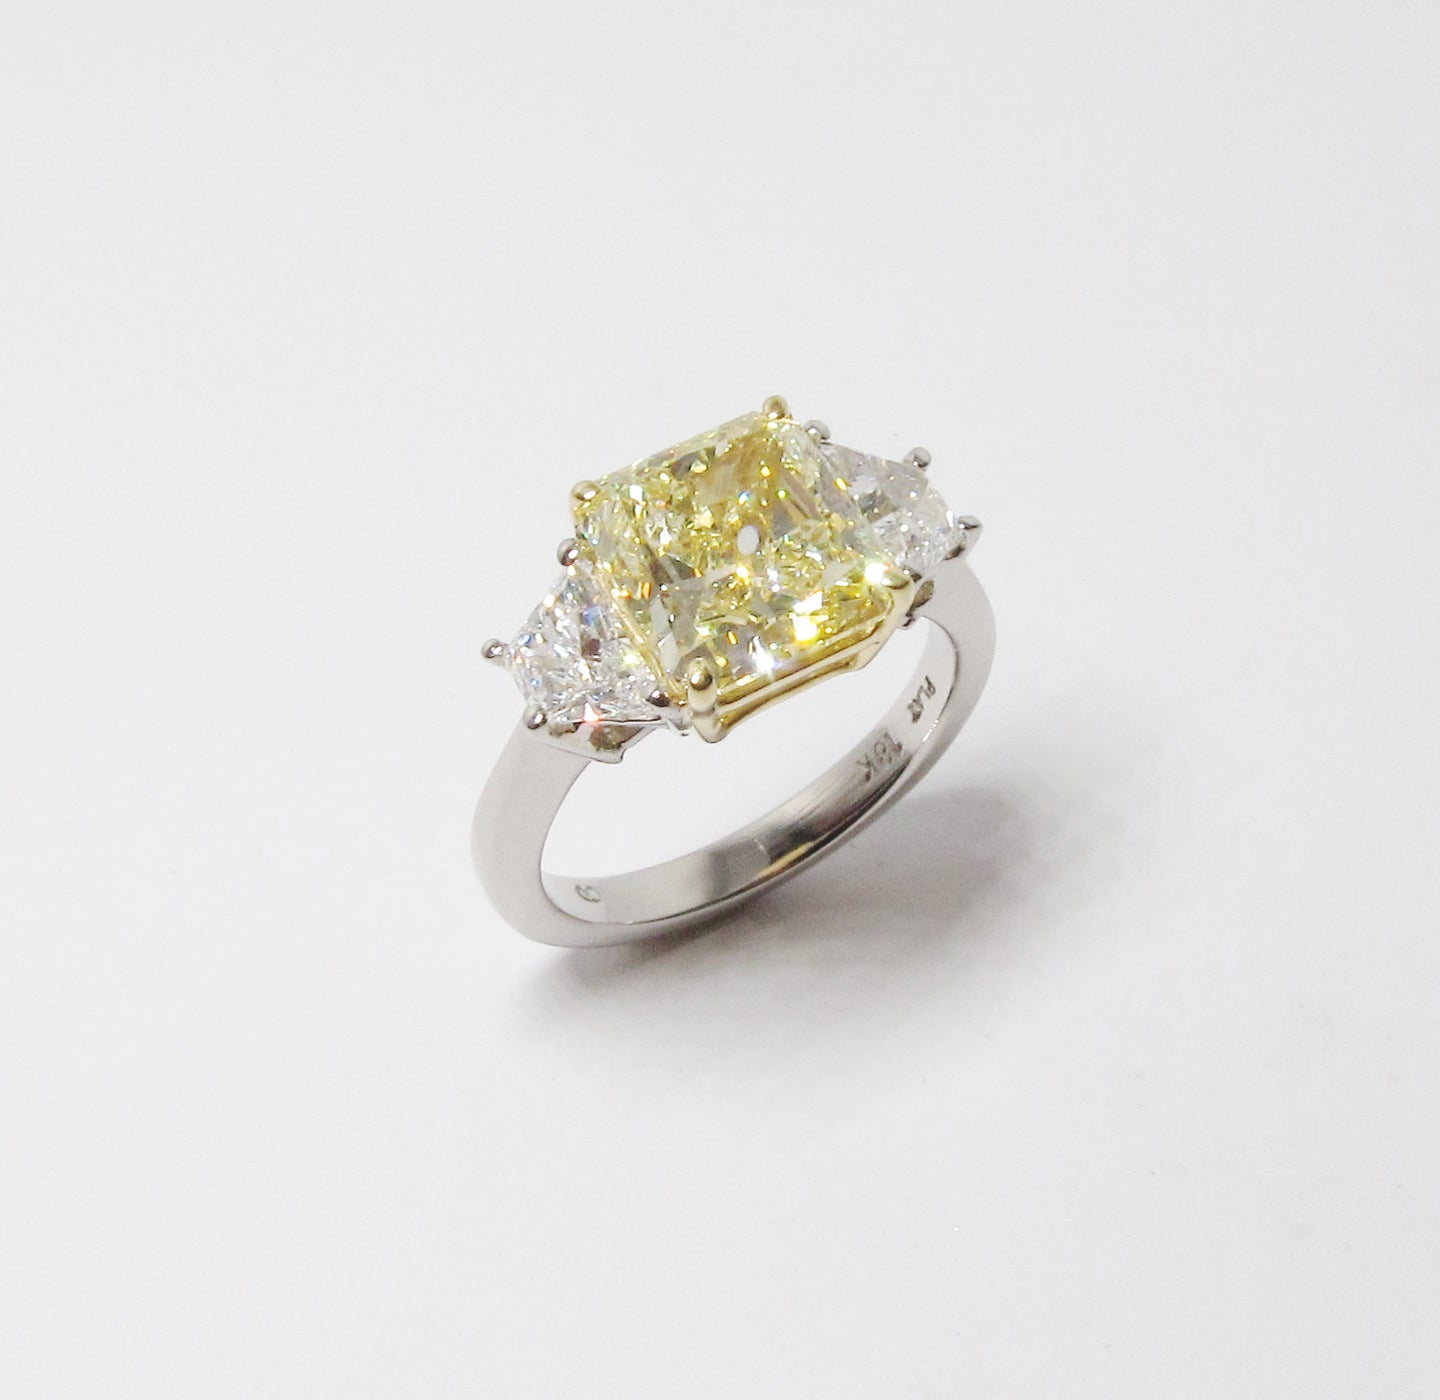 Radiant Cut Yellow Diamond Ring